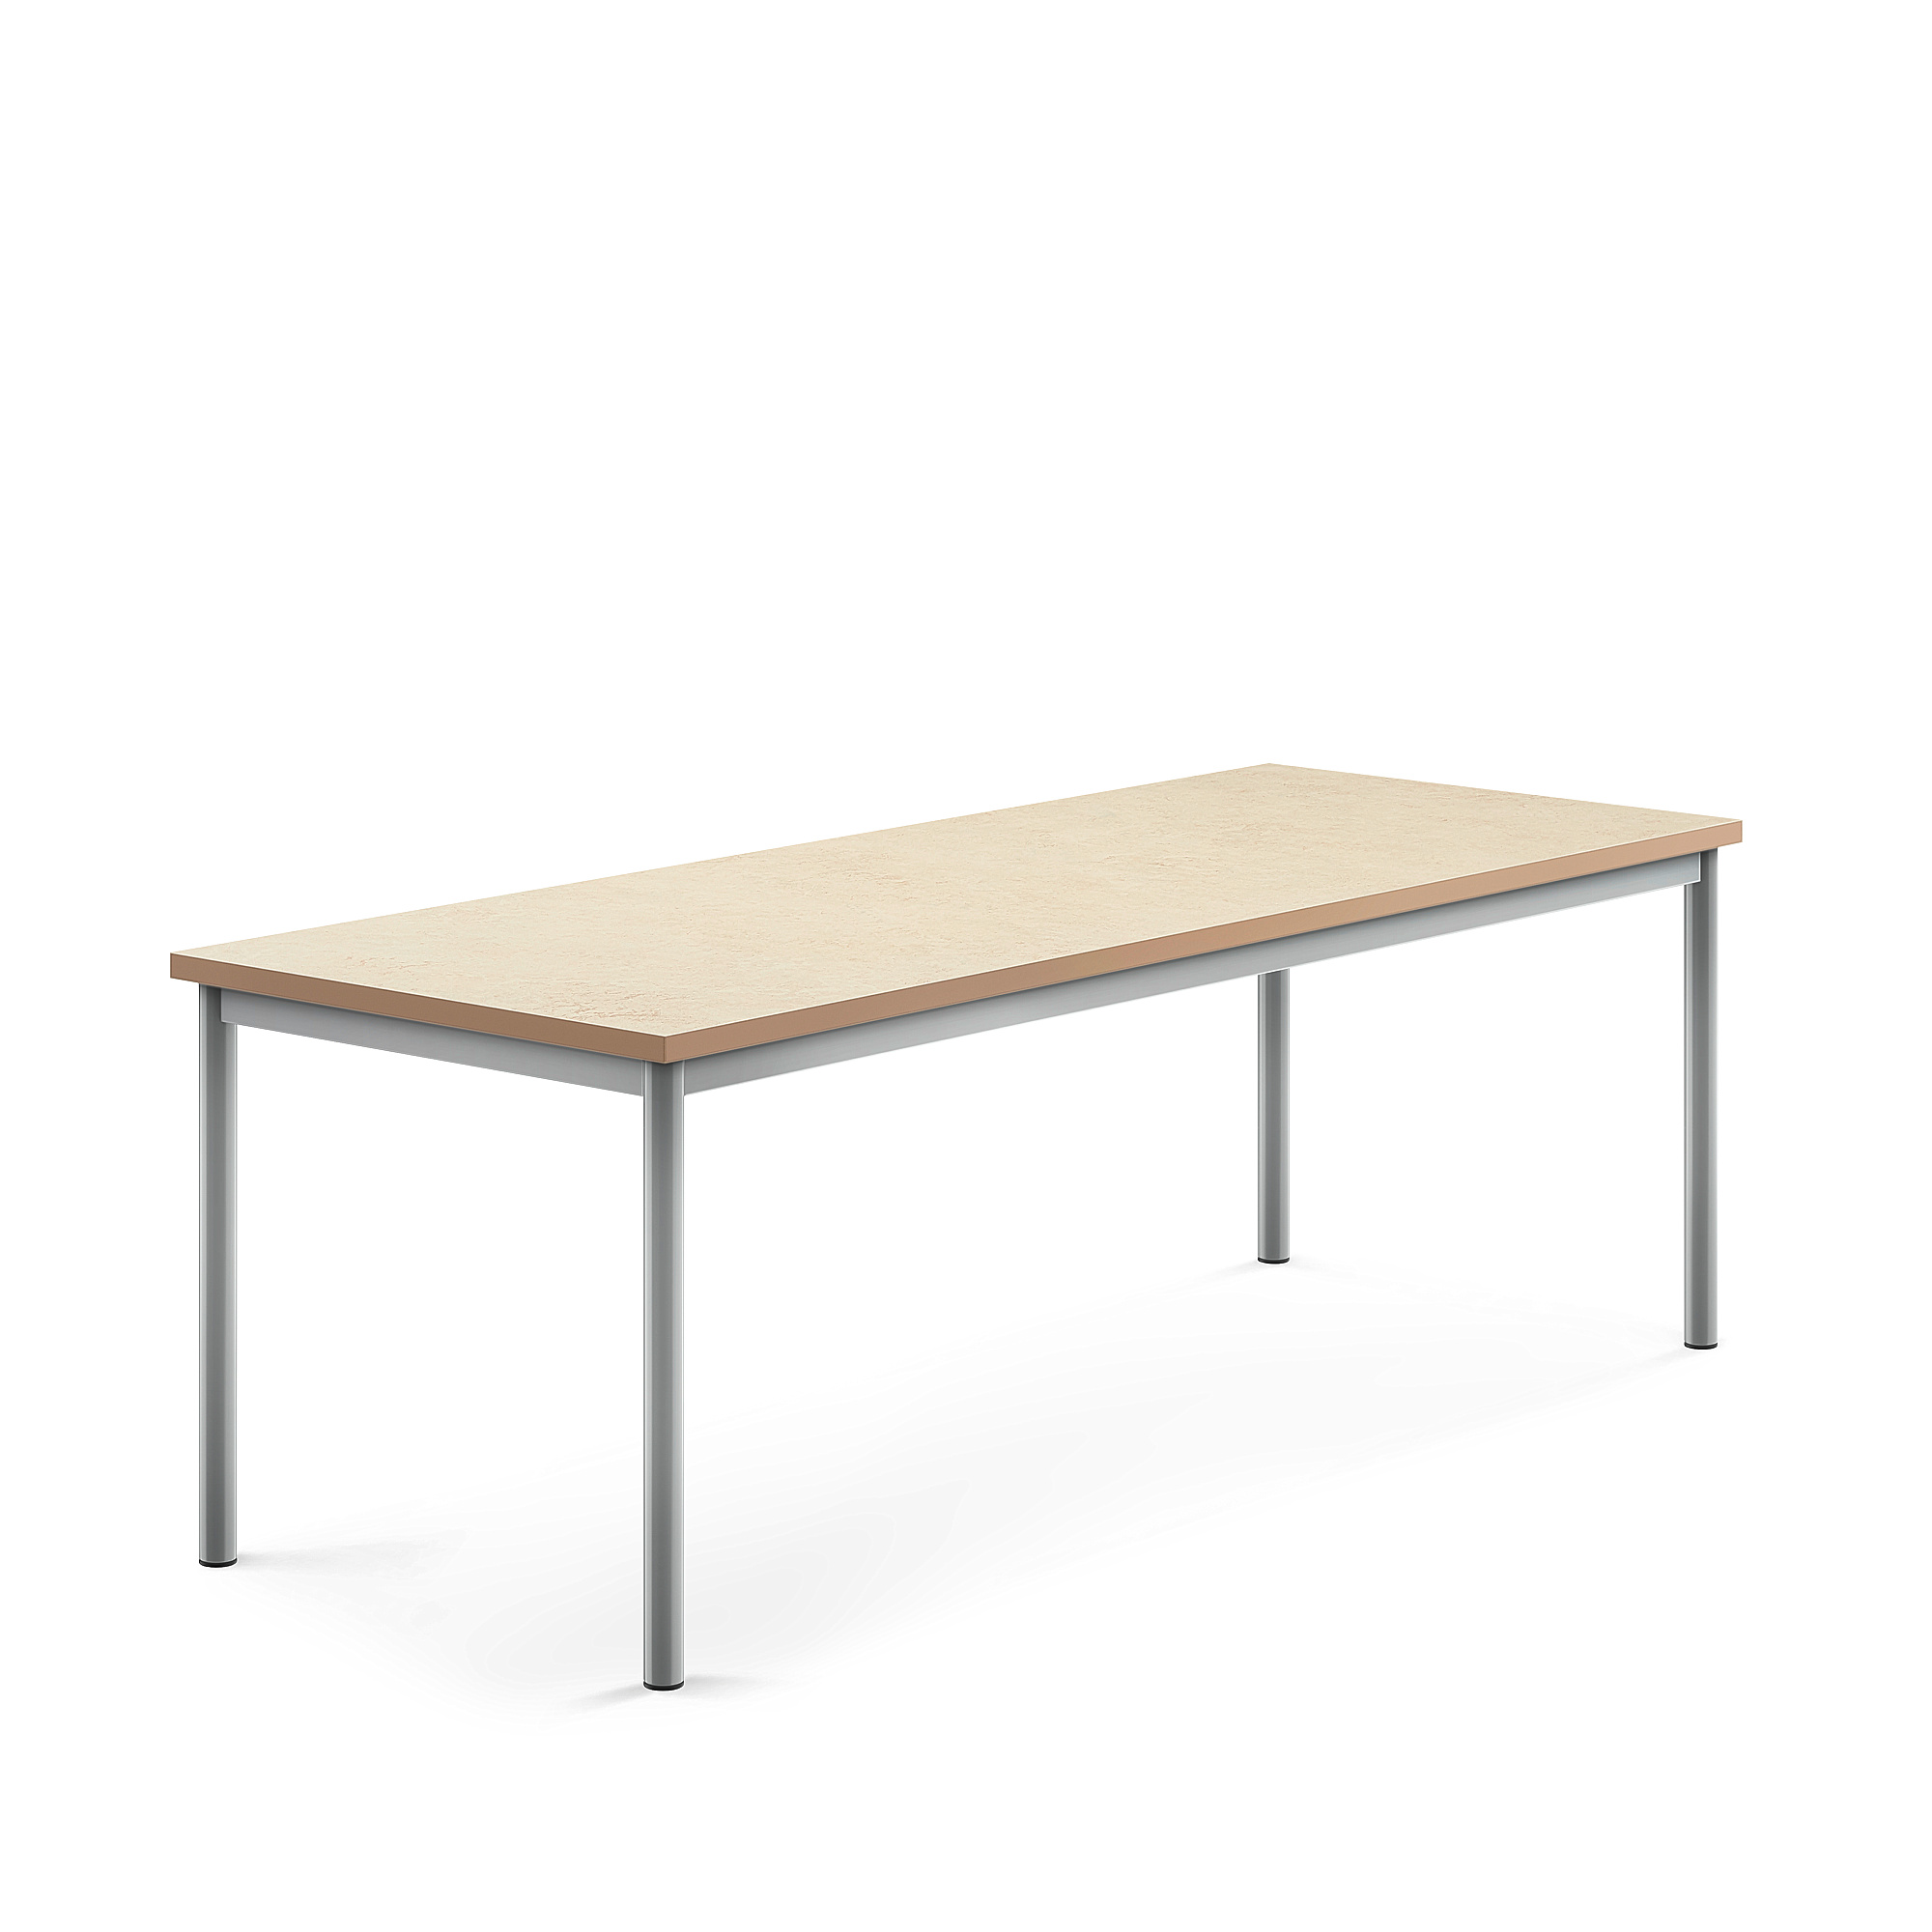 Stůl SONITUS, 1800x700x600 mm, stříbrné nohy, deska s linoleem, béžová